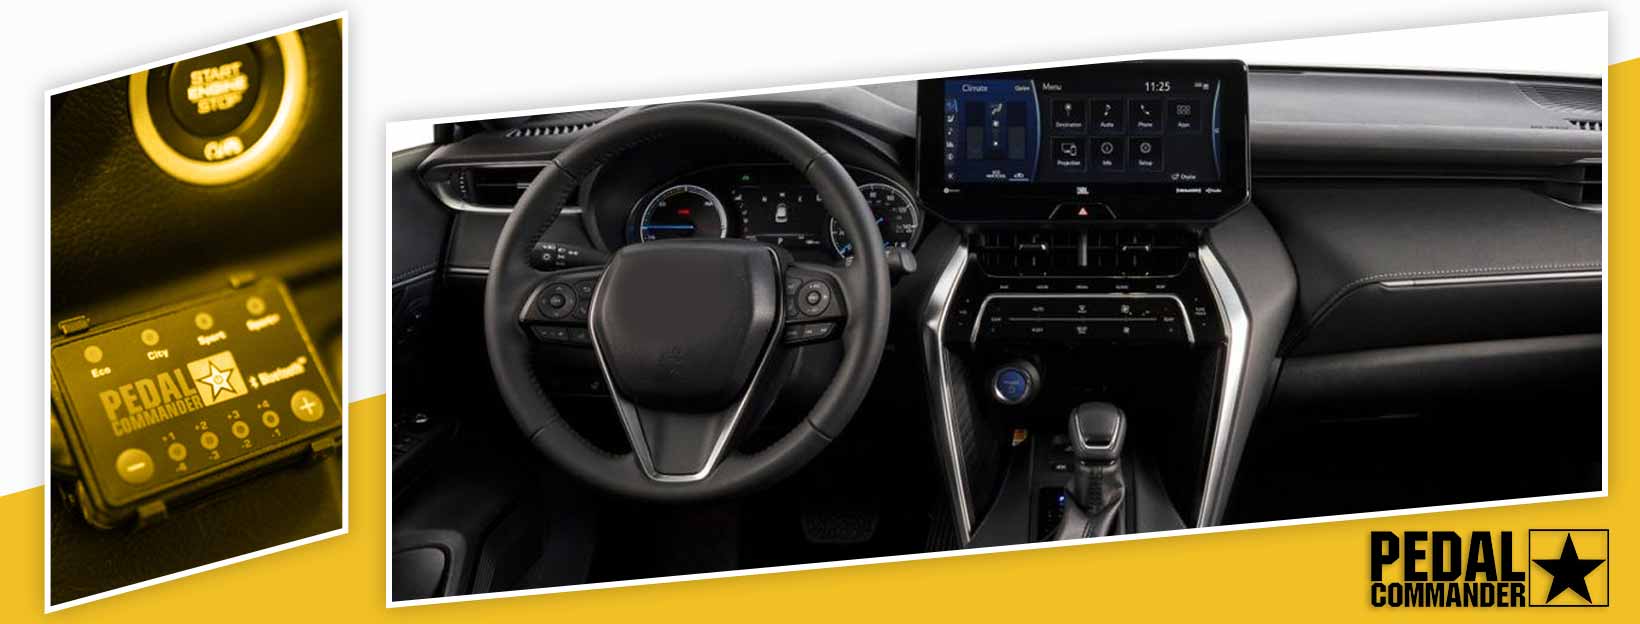 Pedal Commander for Toyota Venza - interior